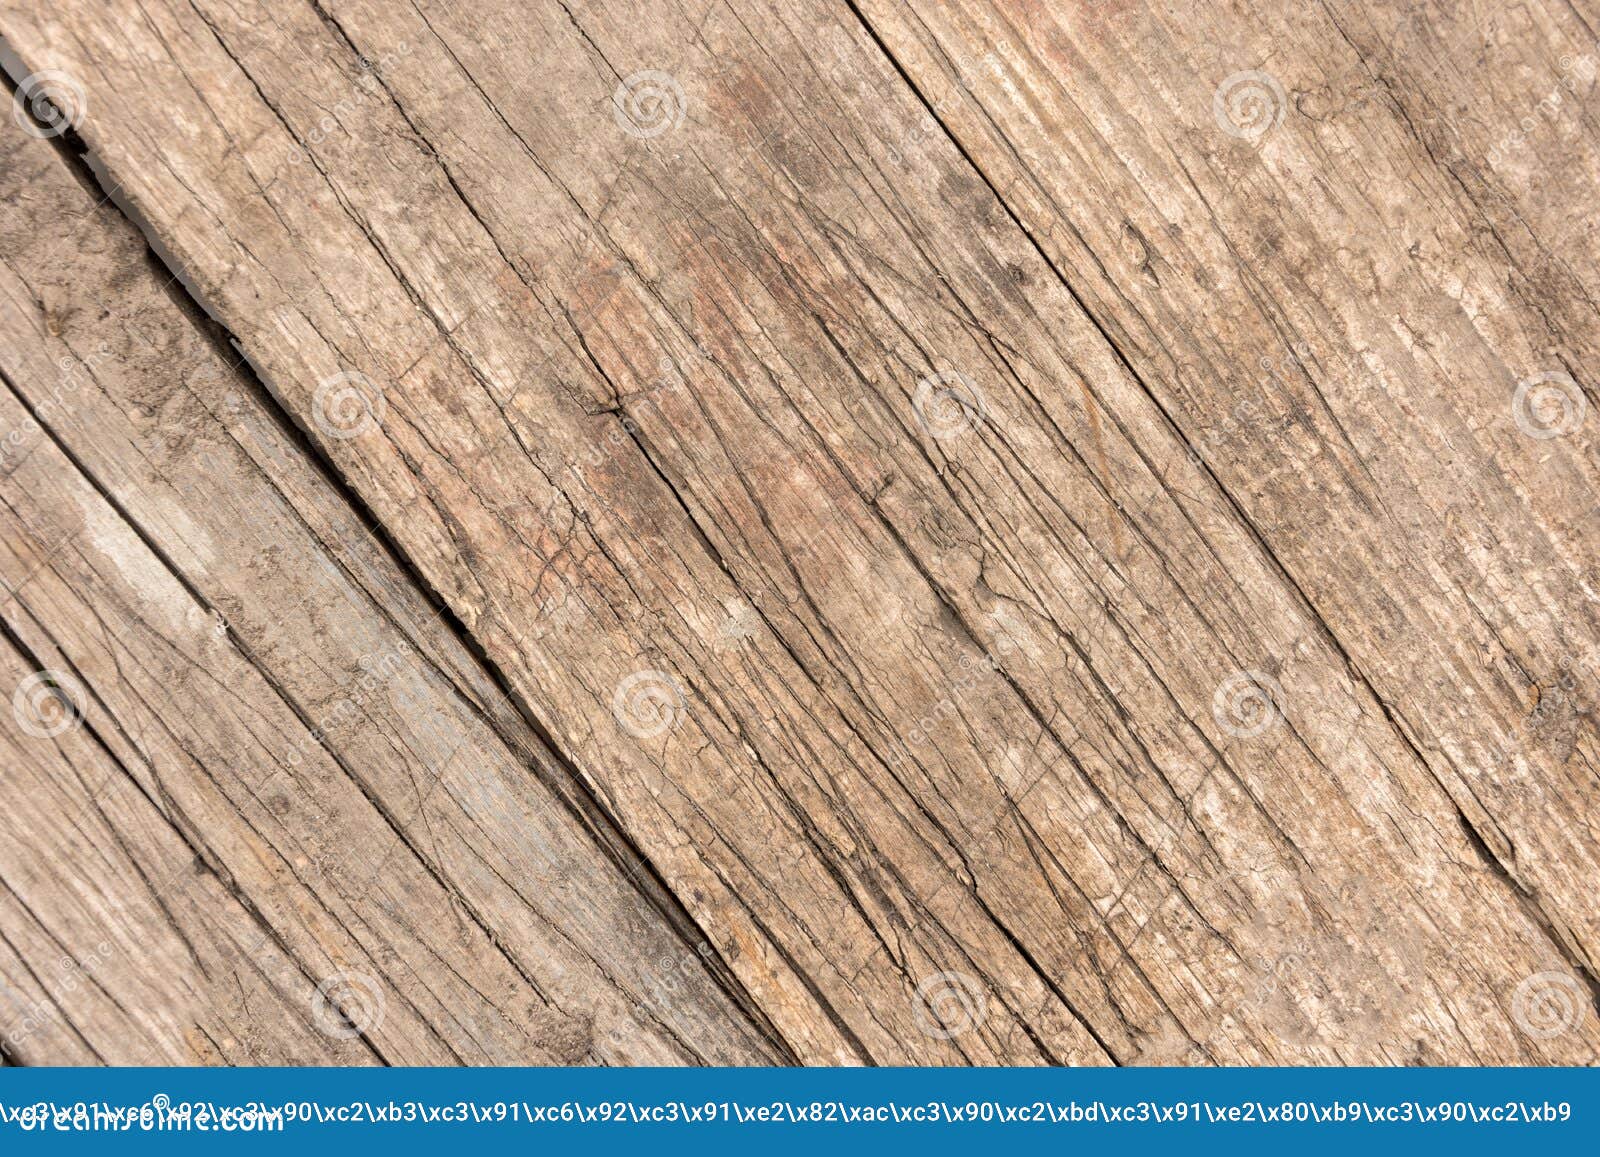 background of old scratched plank boards densely knocked together